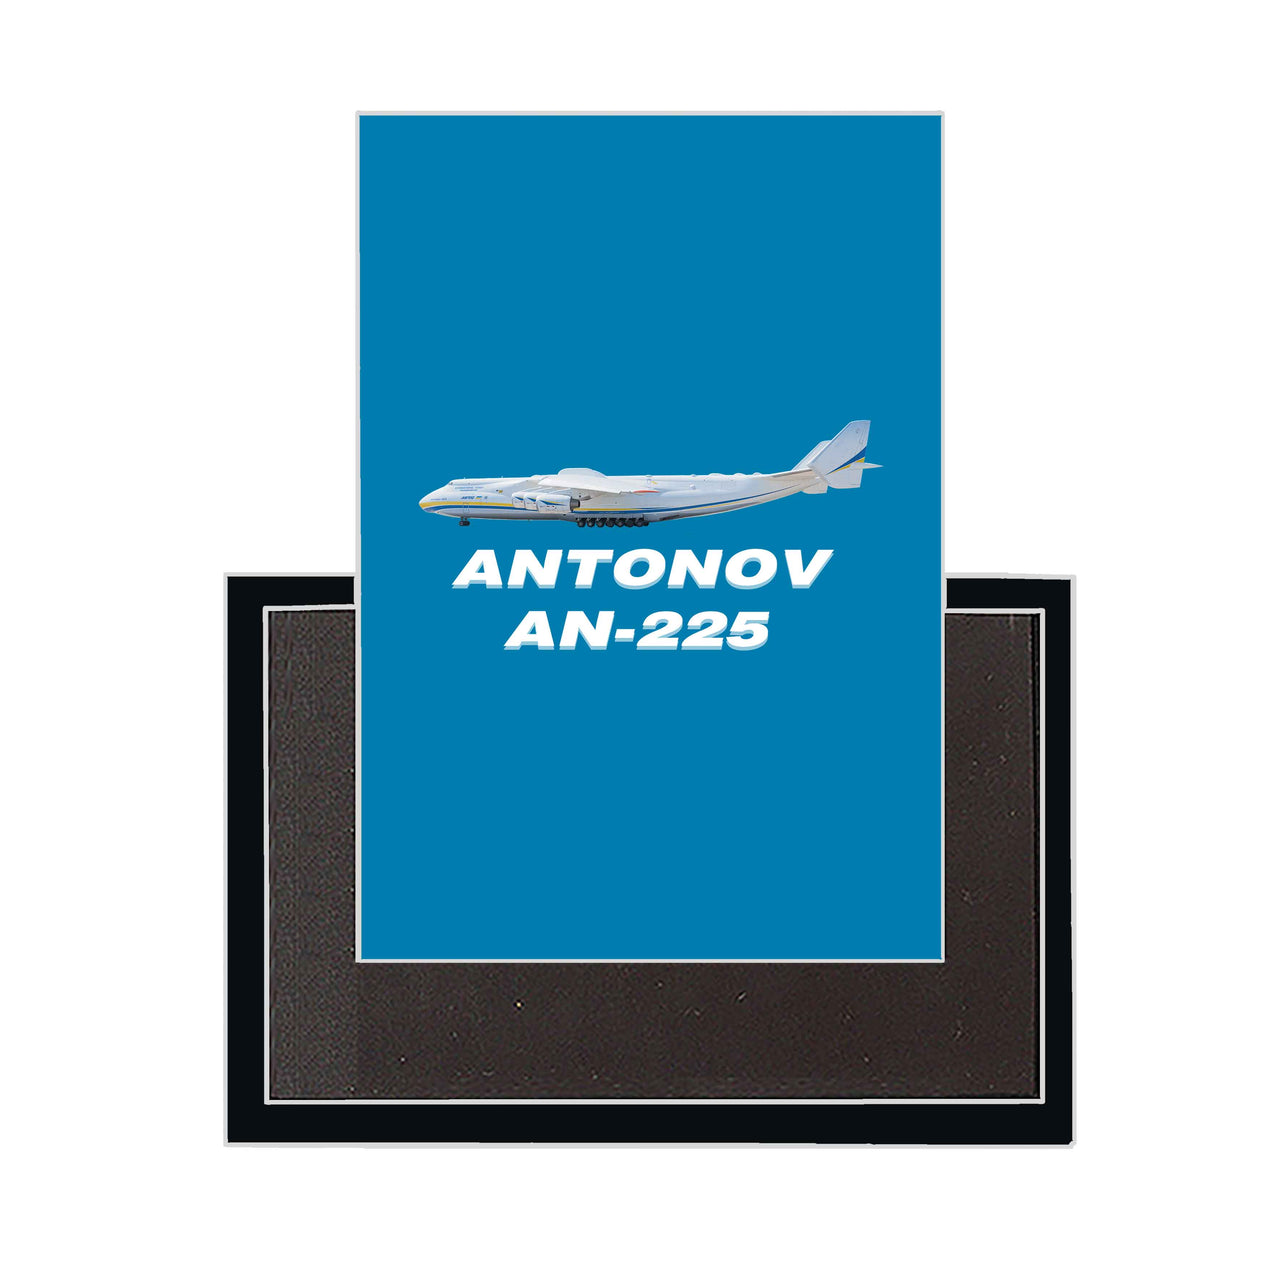 The Antonov AN-225 Designed Magnets